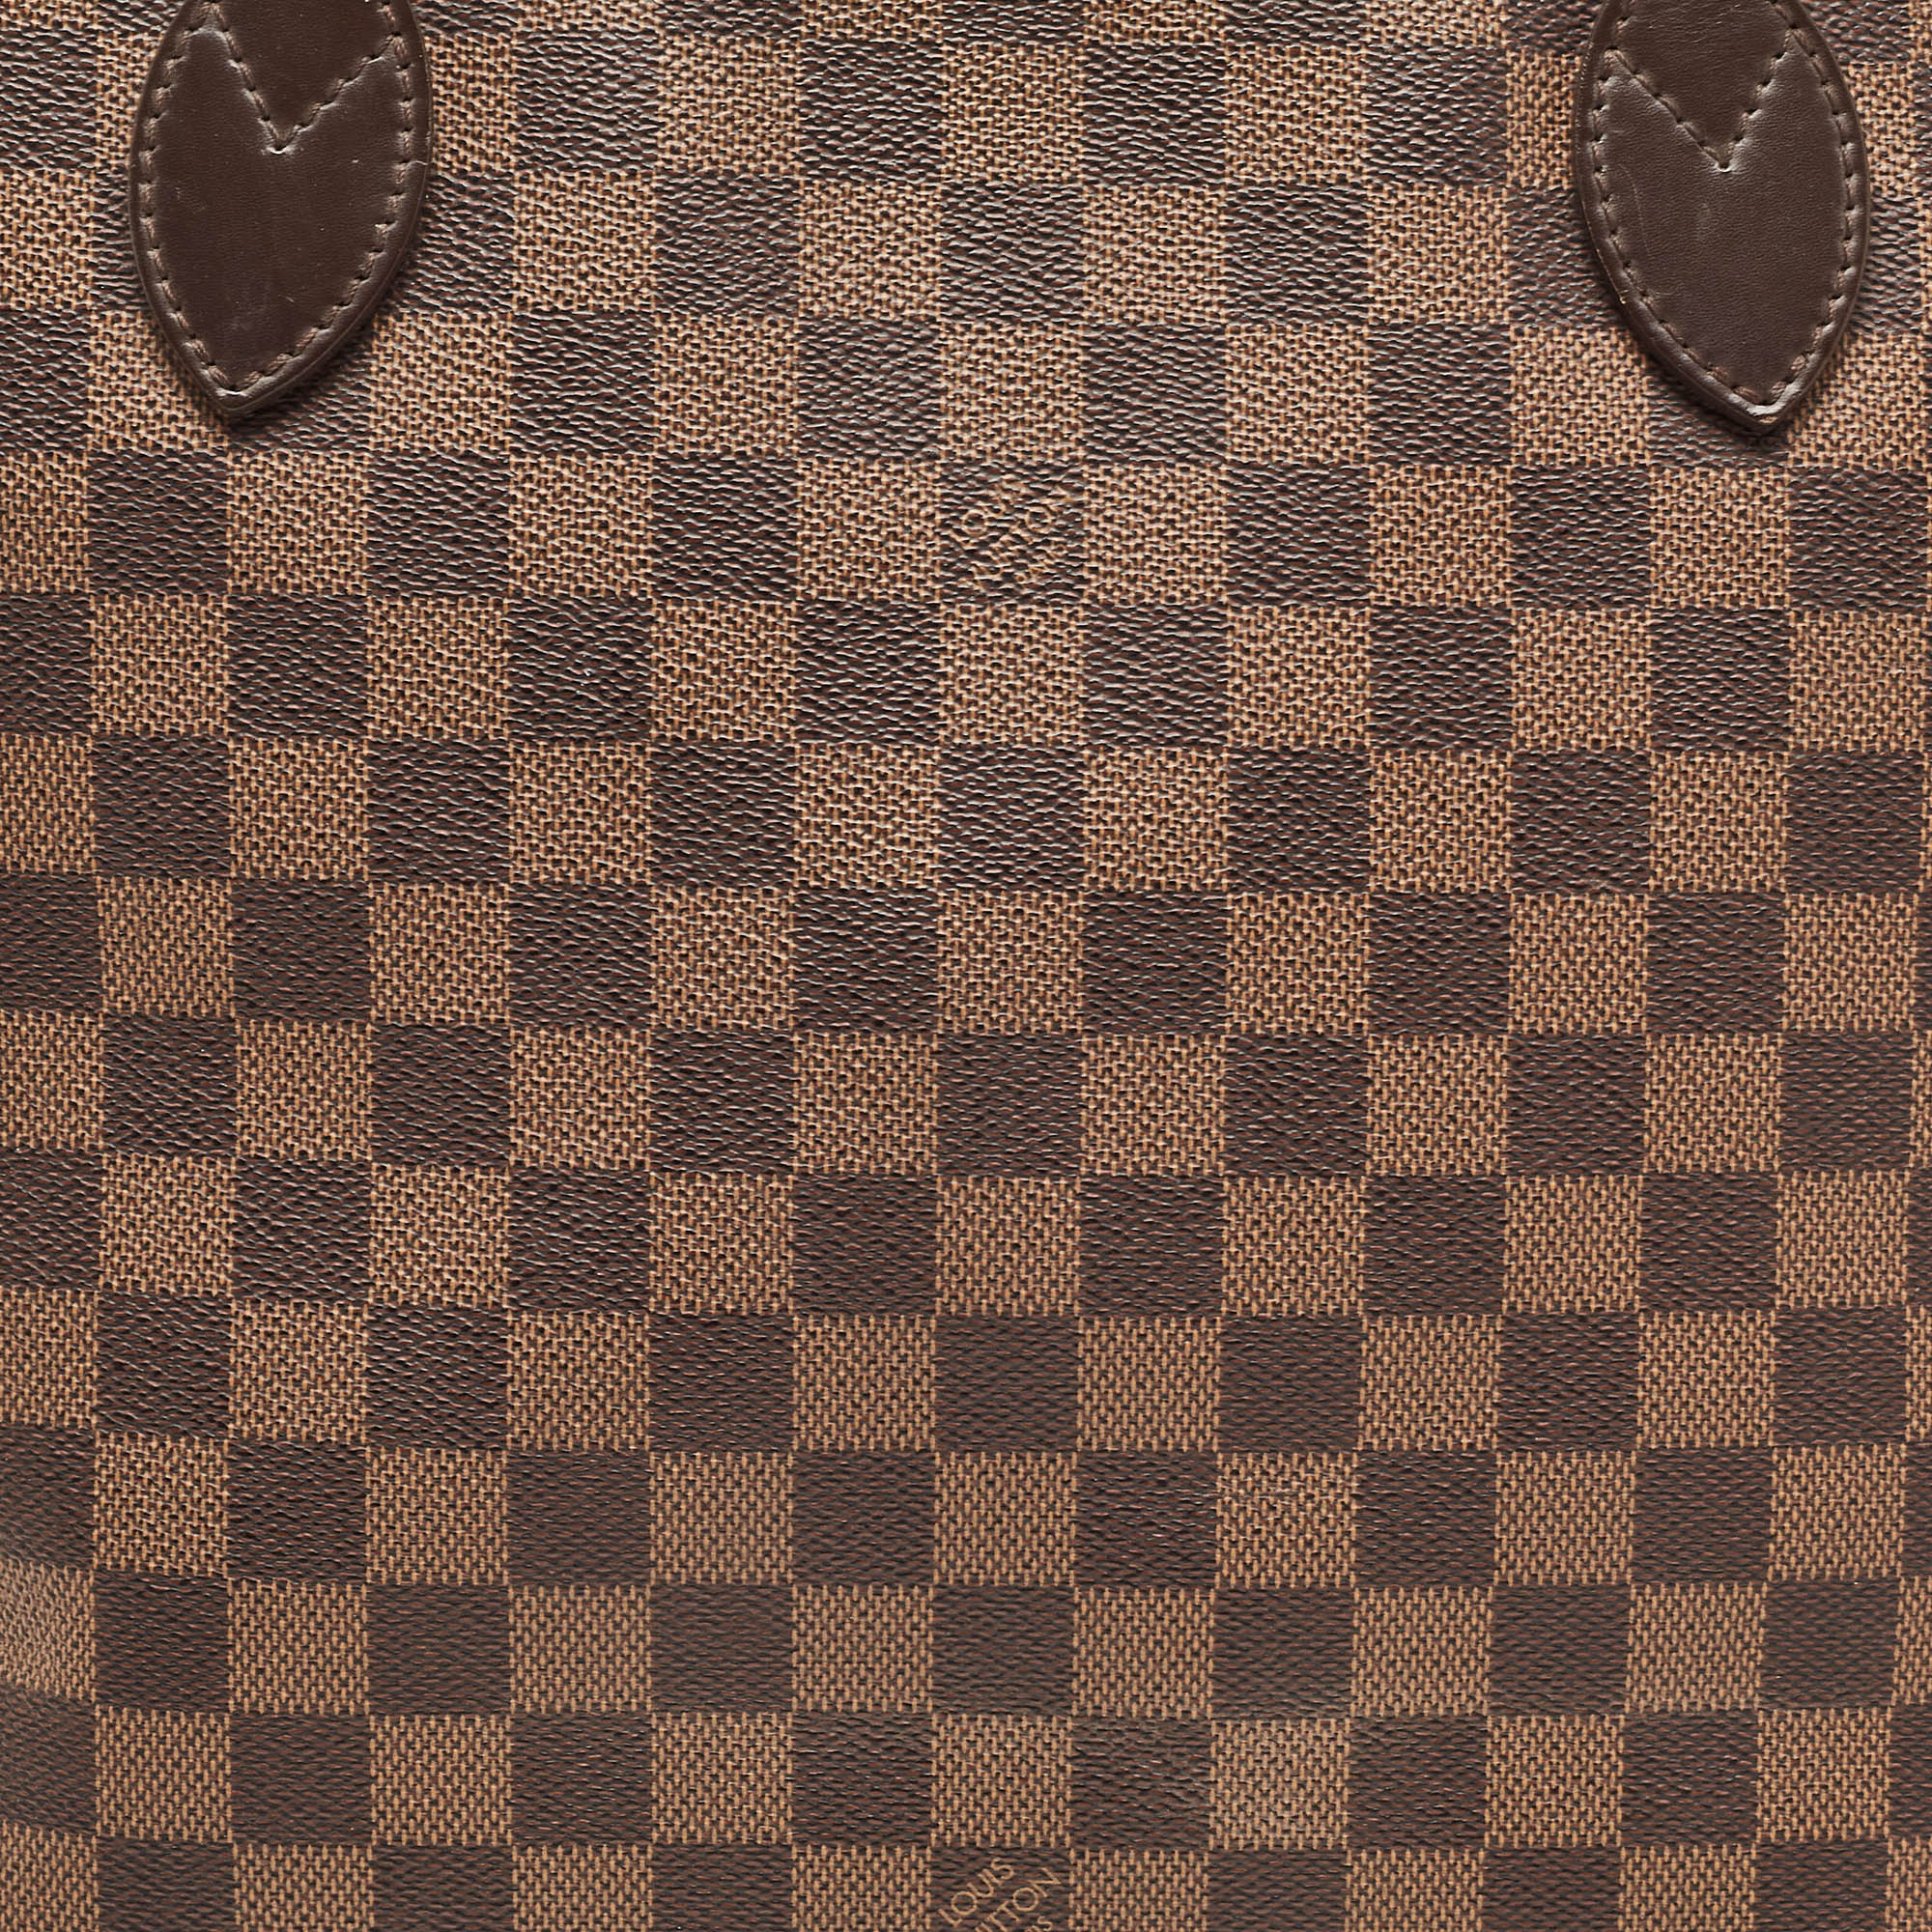 Louis Vuitton Damier Ebene Canvas Neverfull MM Bag